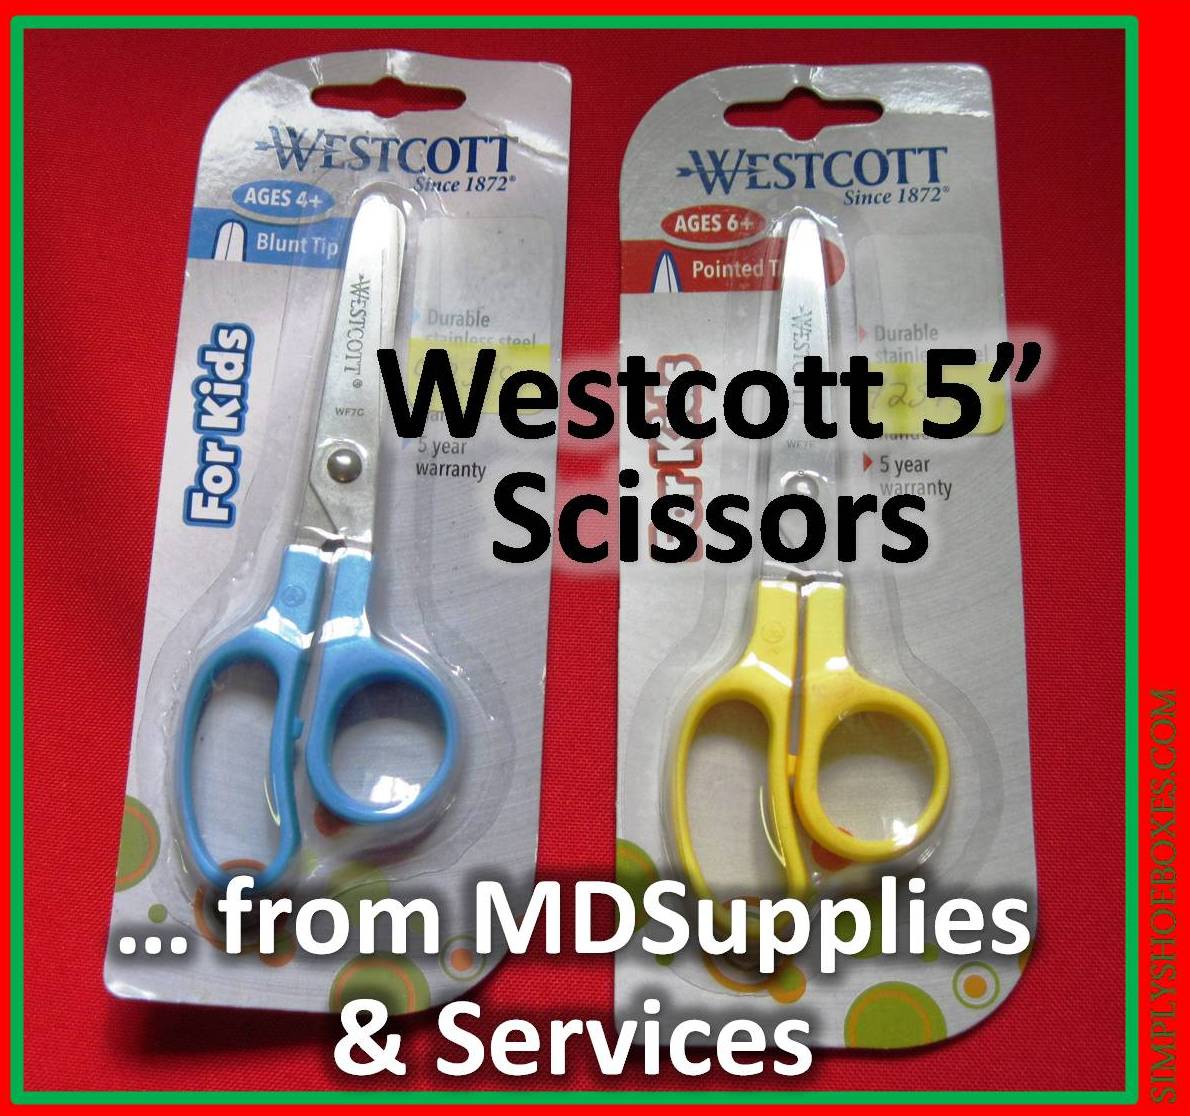 Westcott Kids Scissors, 2-Pack